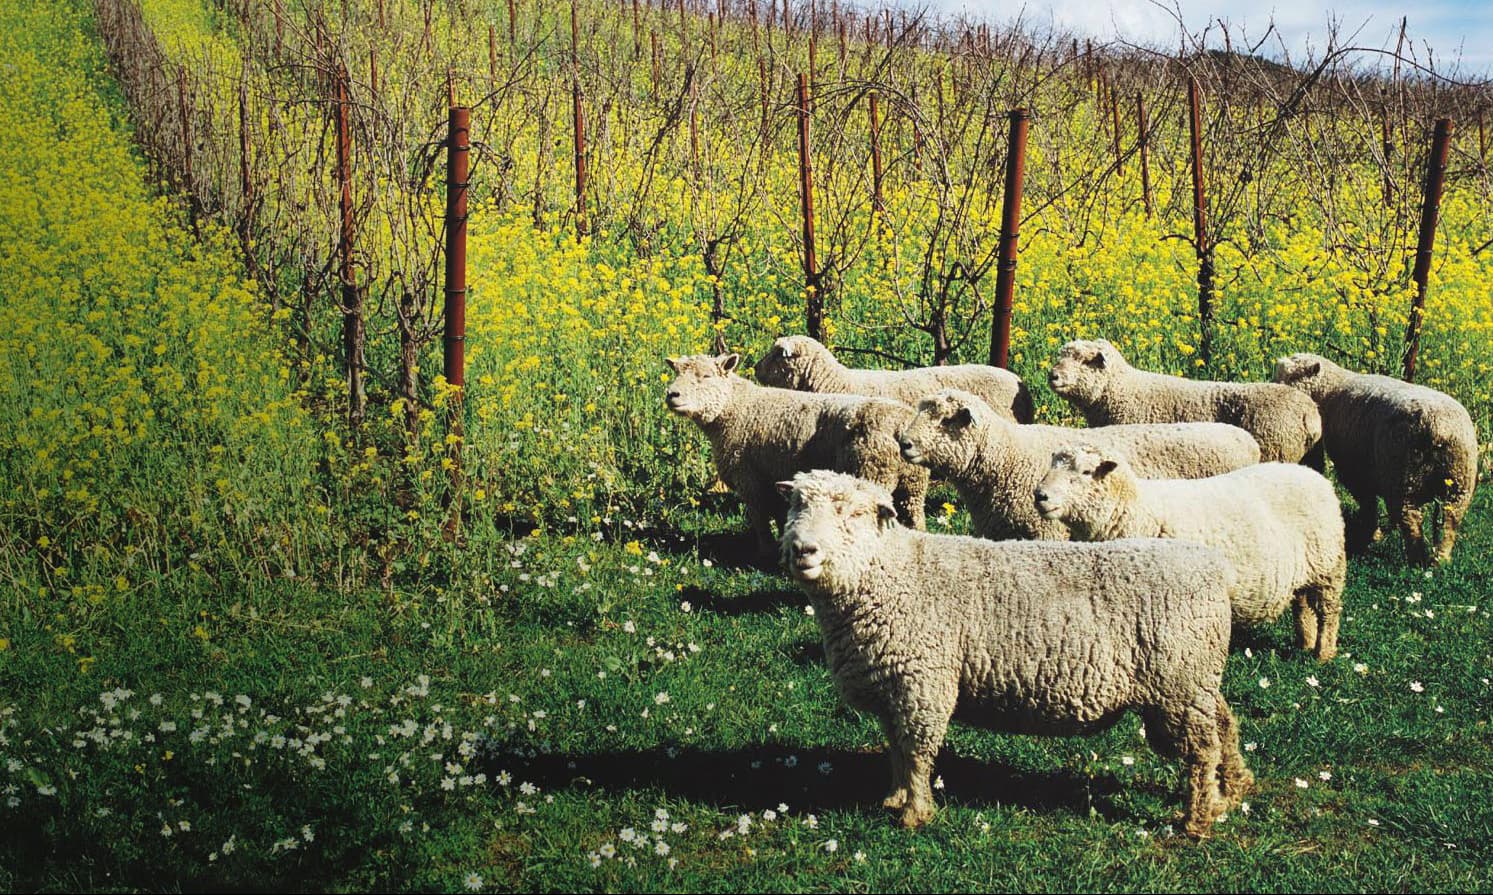 Sheep by a vineyard